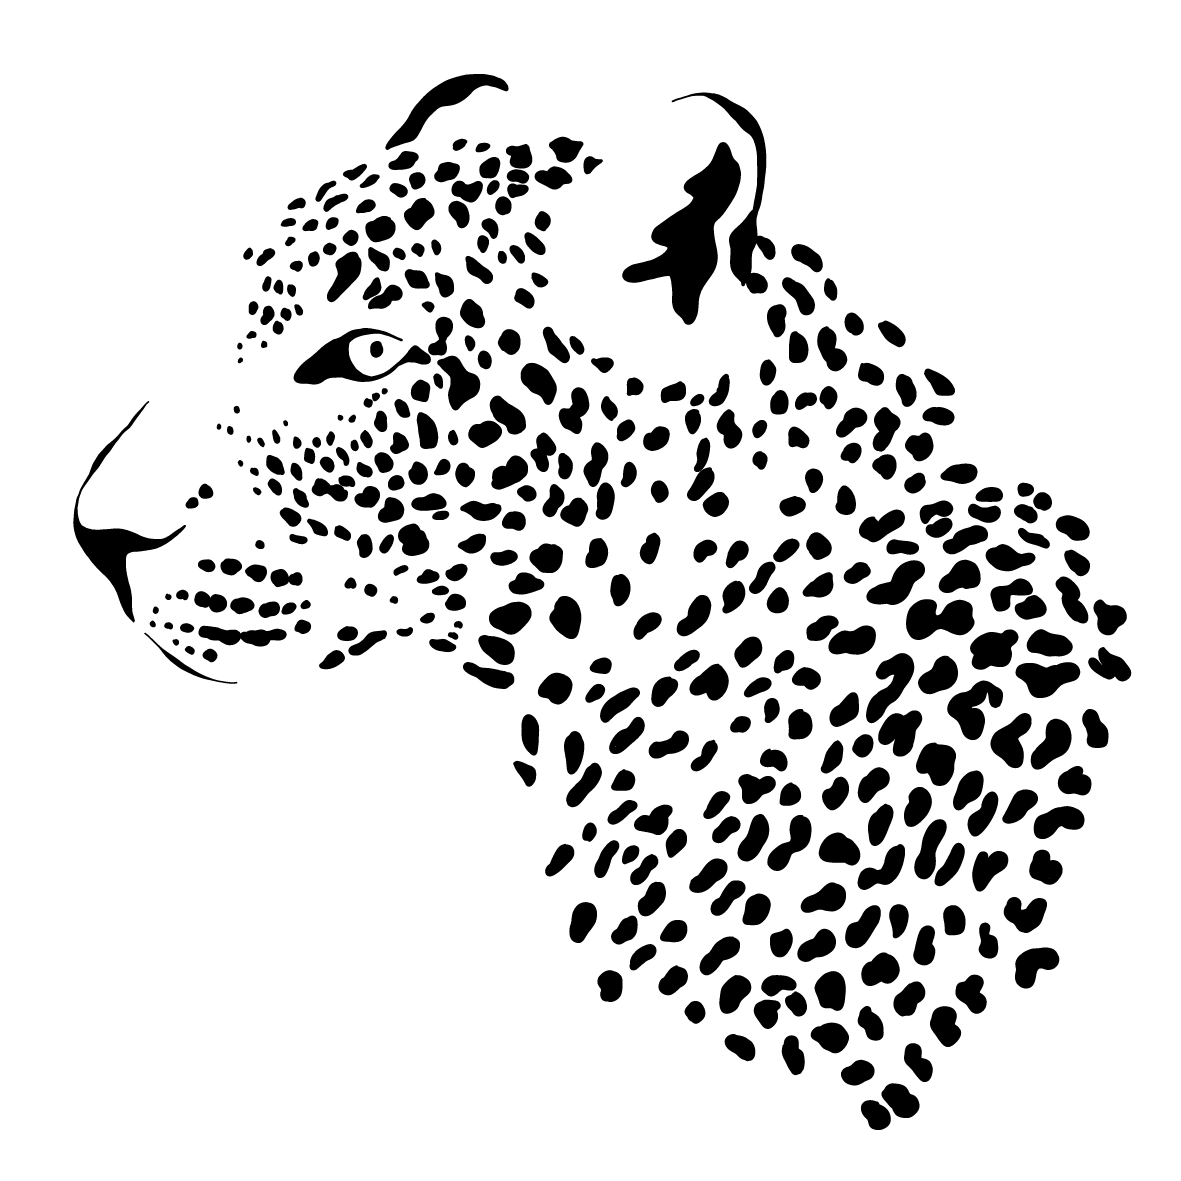 leopard tours kenya